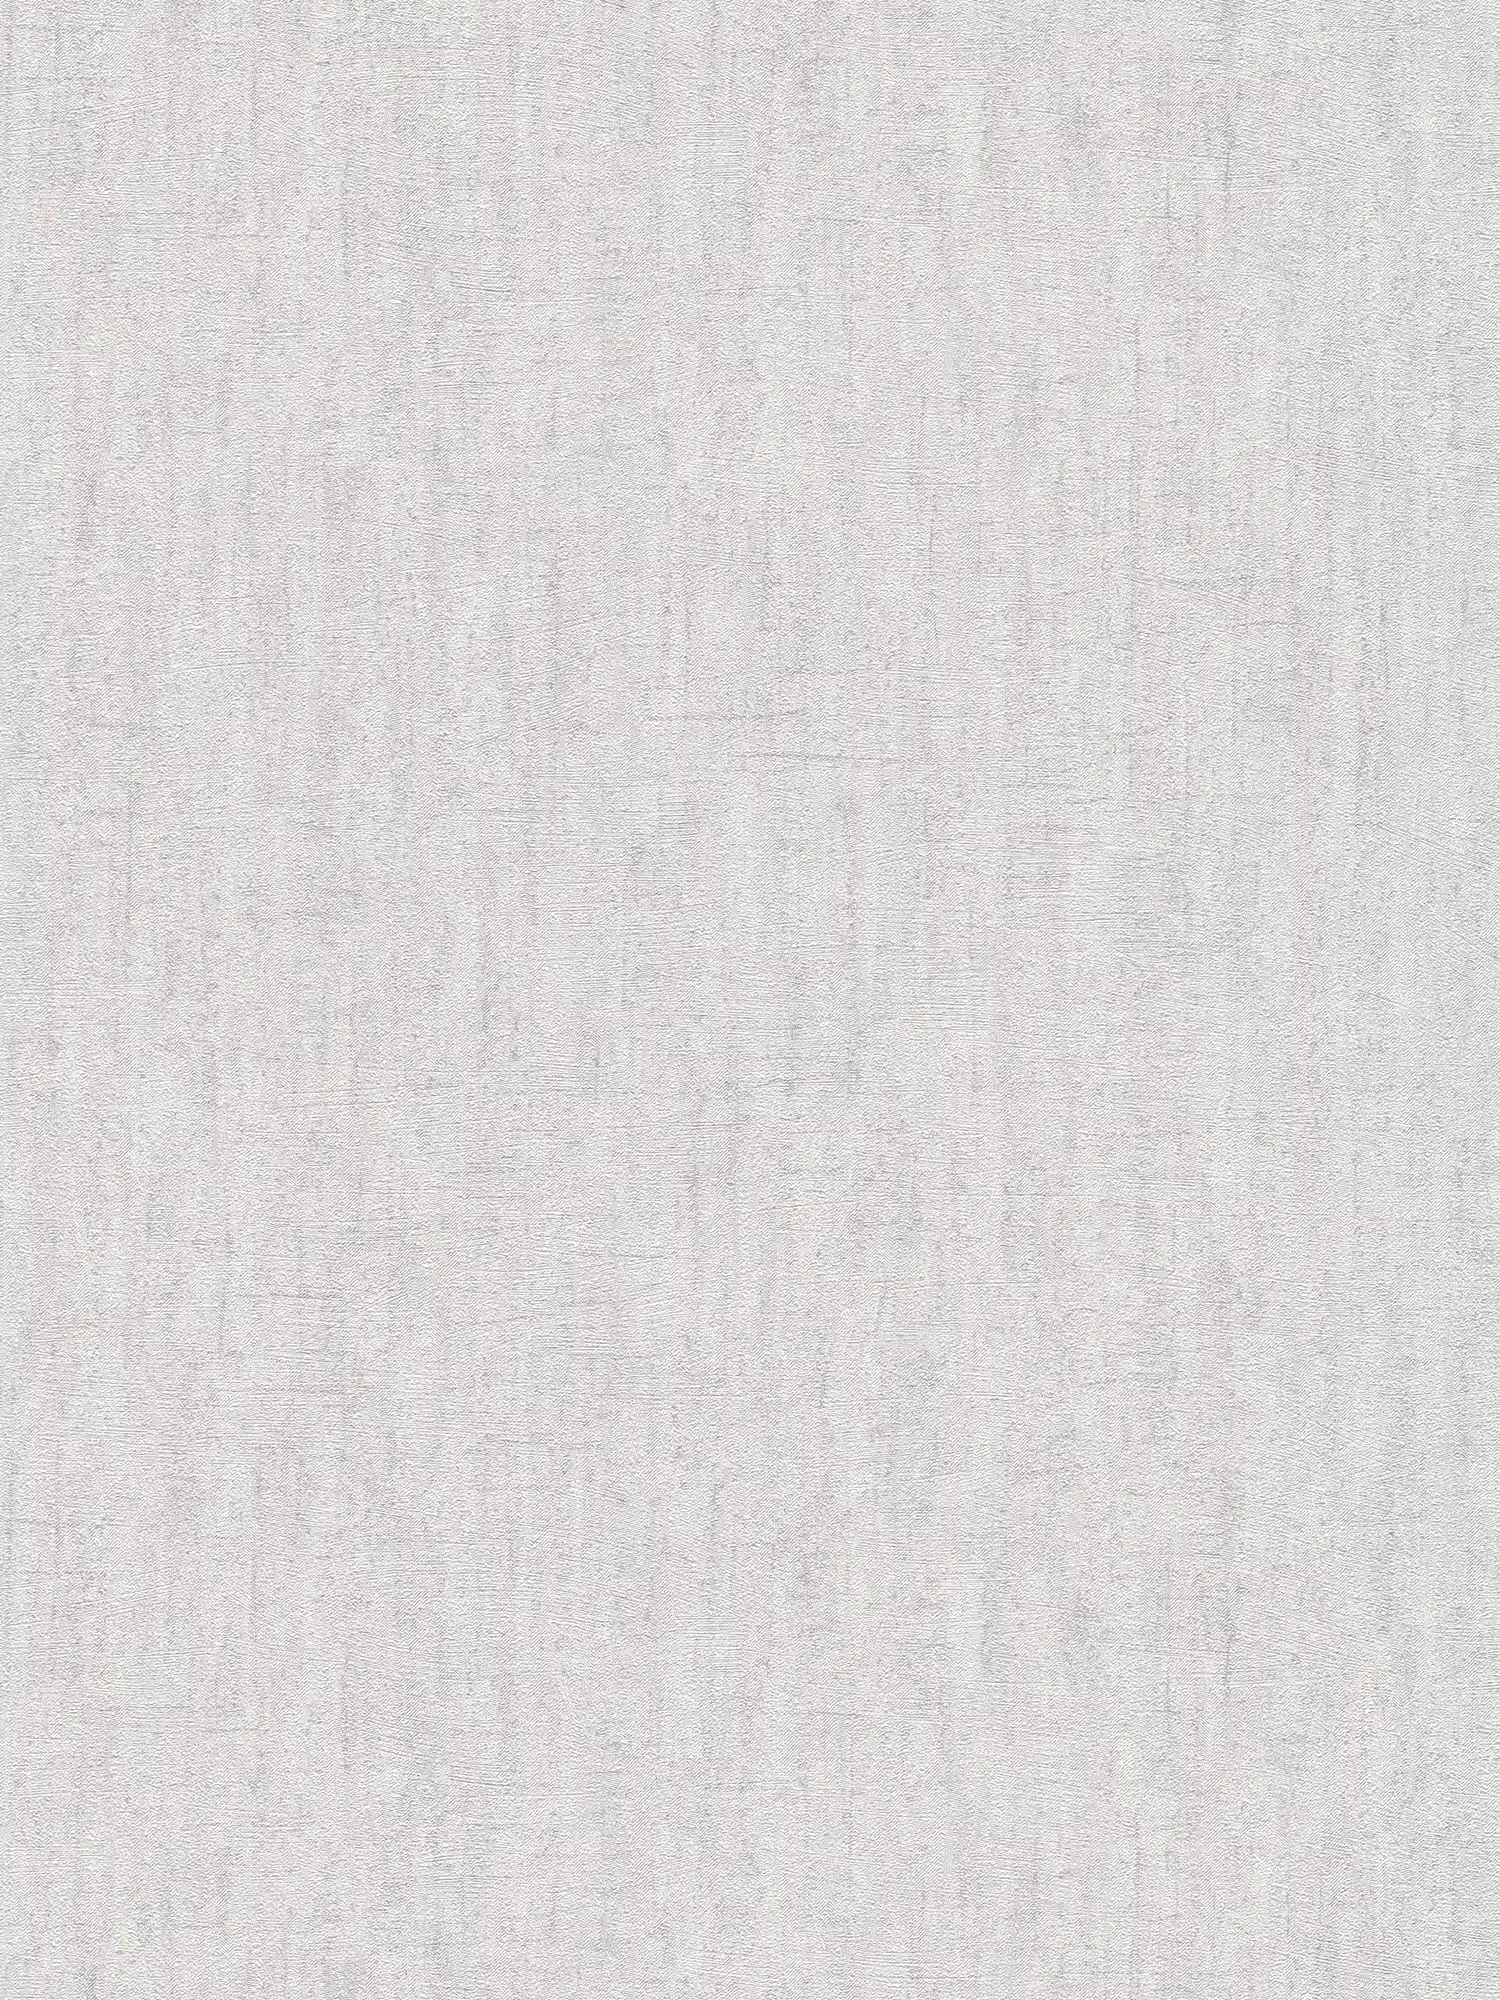 Hellgraue Vliestapete glänzend mit Strukturmuster – Grau
